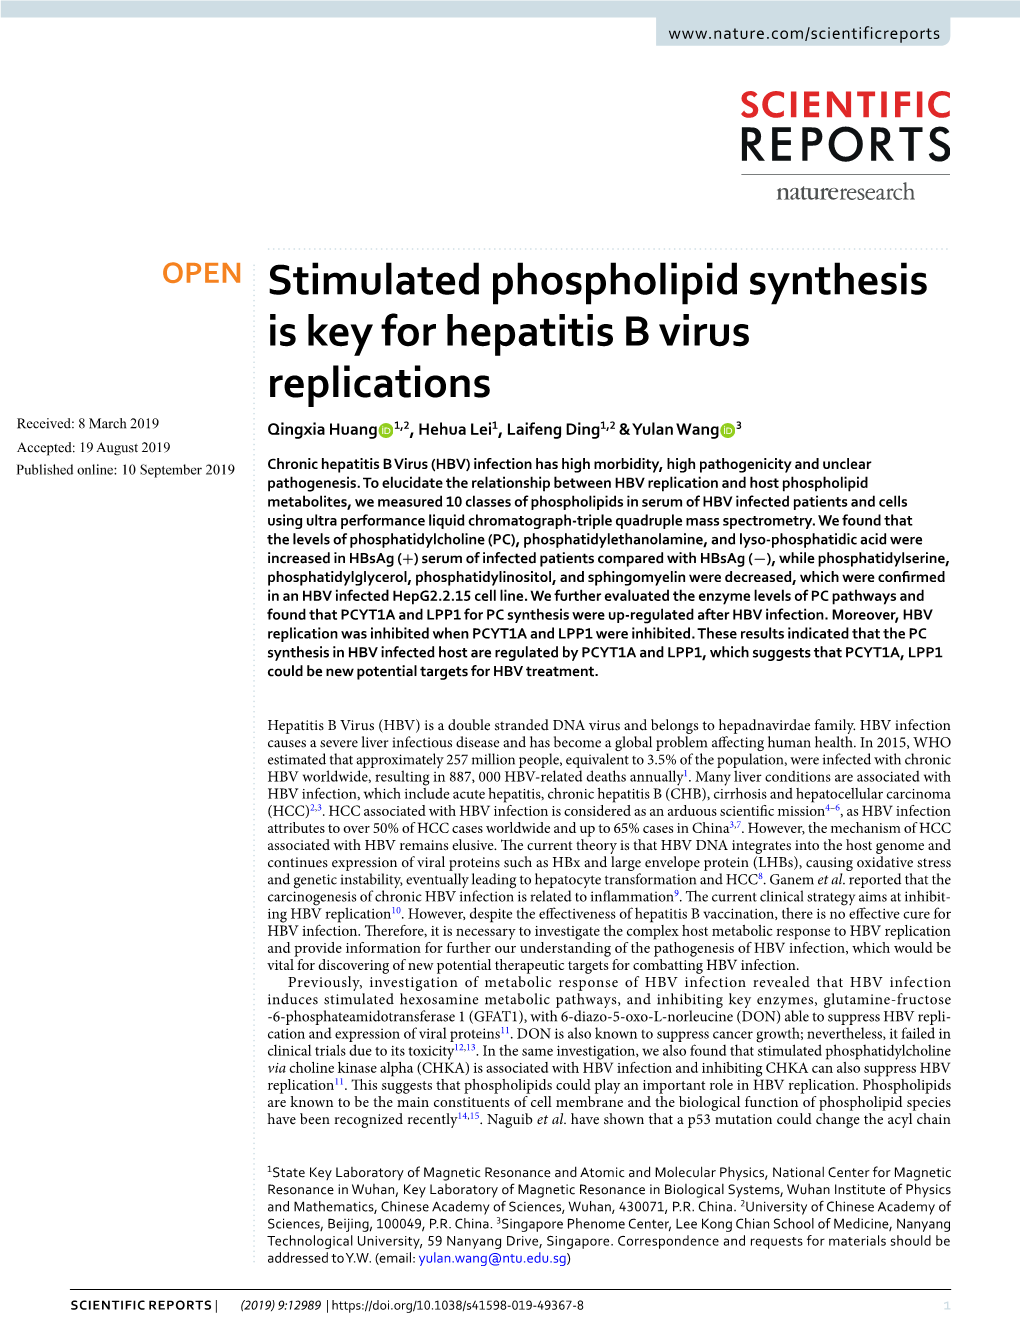 Stimulated Phospholipid Synthesis Is Key for Hepatitis B Virus Replications